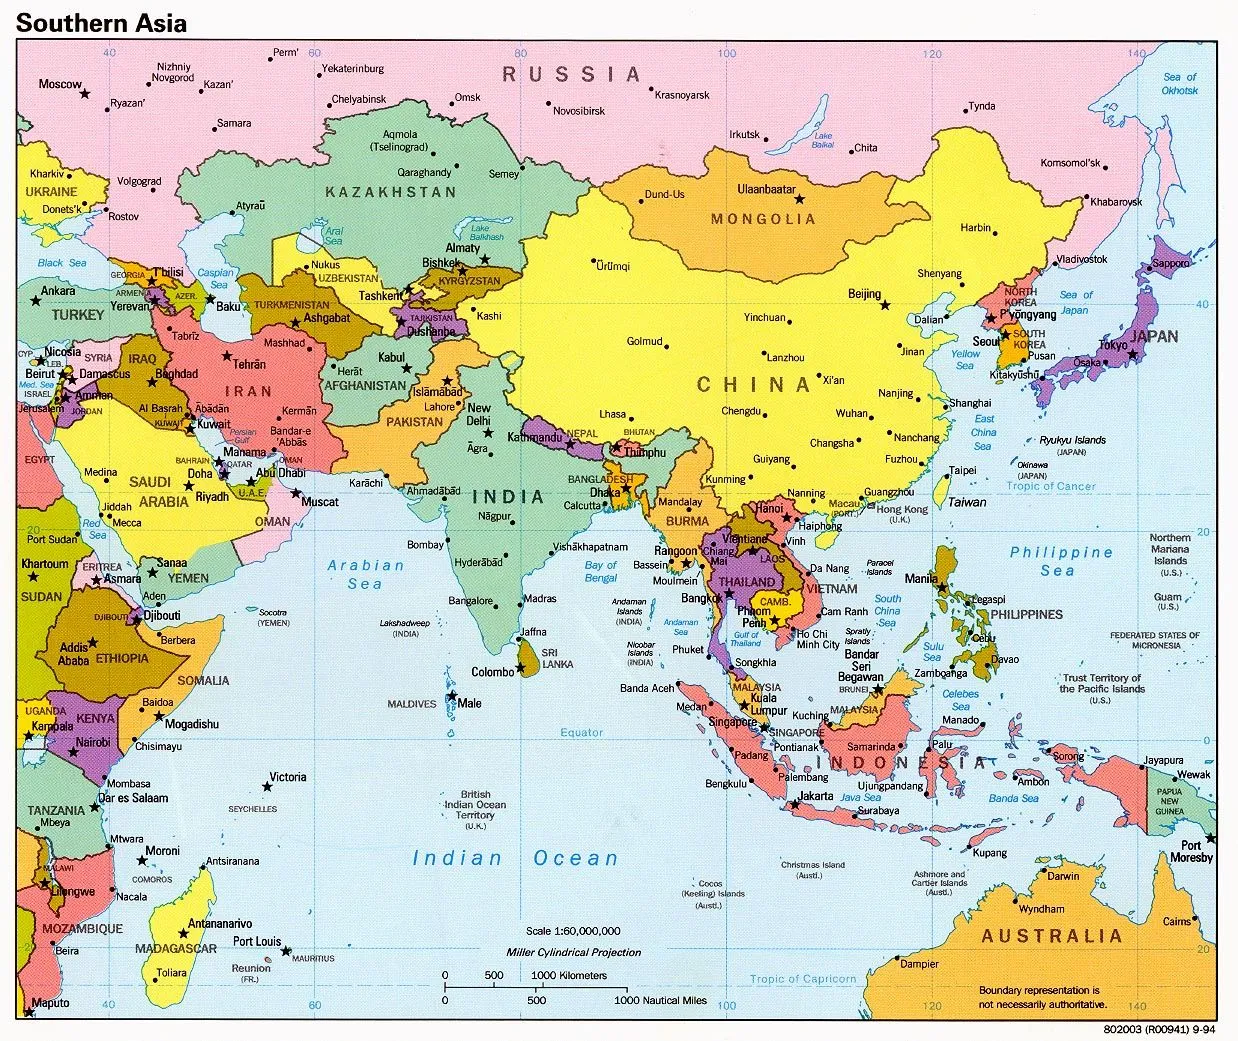 Mapa Politico de Asia Meridional 1994 - Tamaño completo